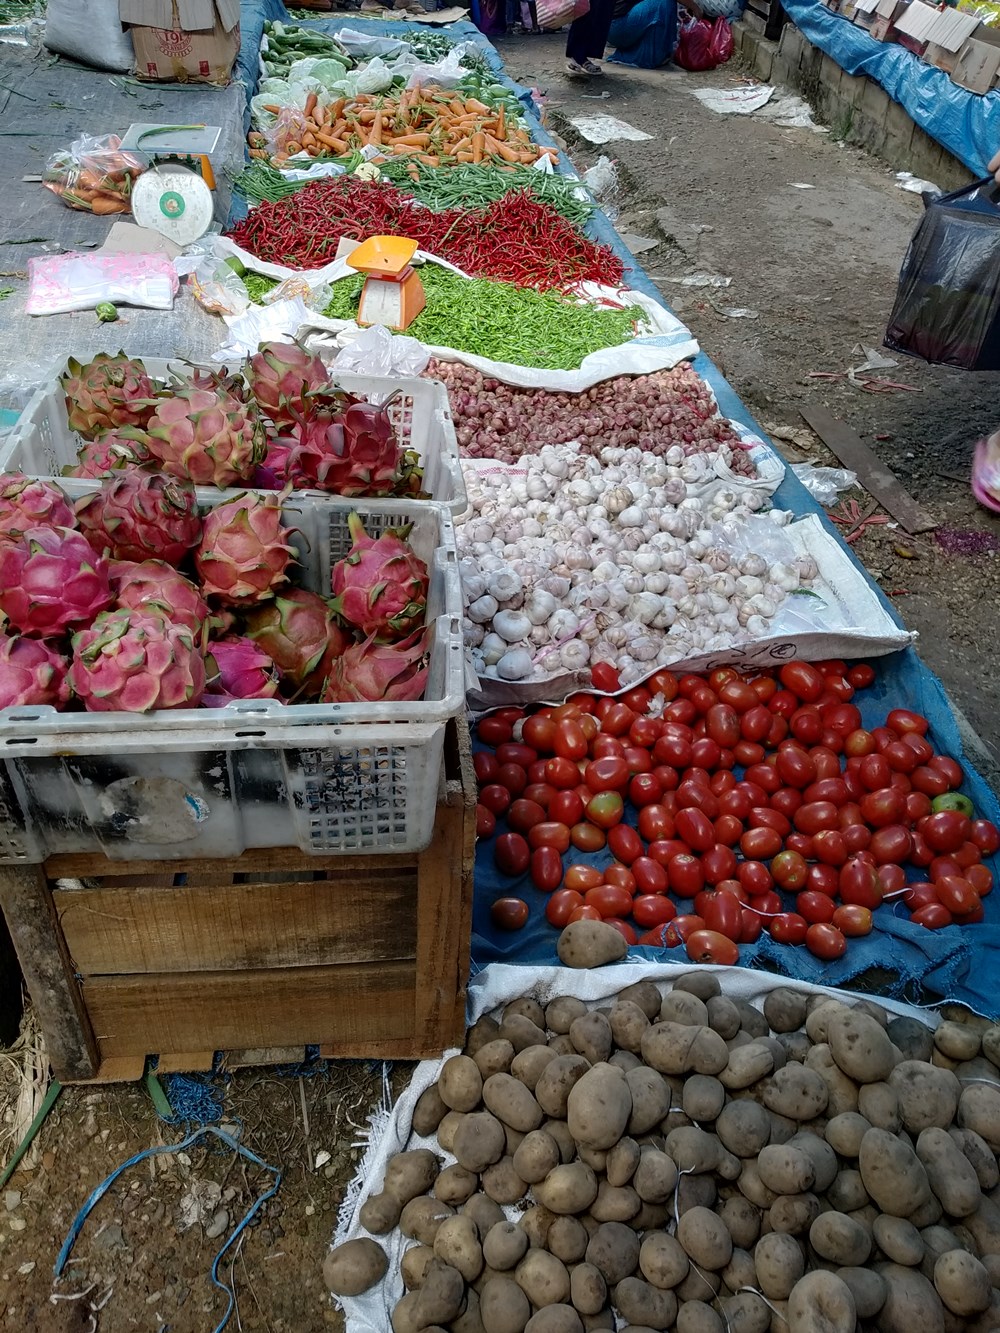 Foto Gratis Pasar Free Stock Photo Traditional market in Indonesia Asia penjual sayuran buah naga tomat kentang